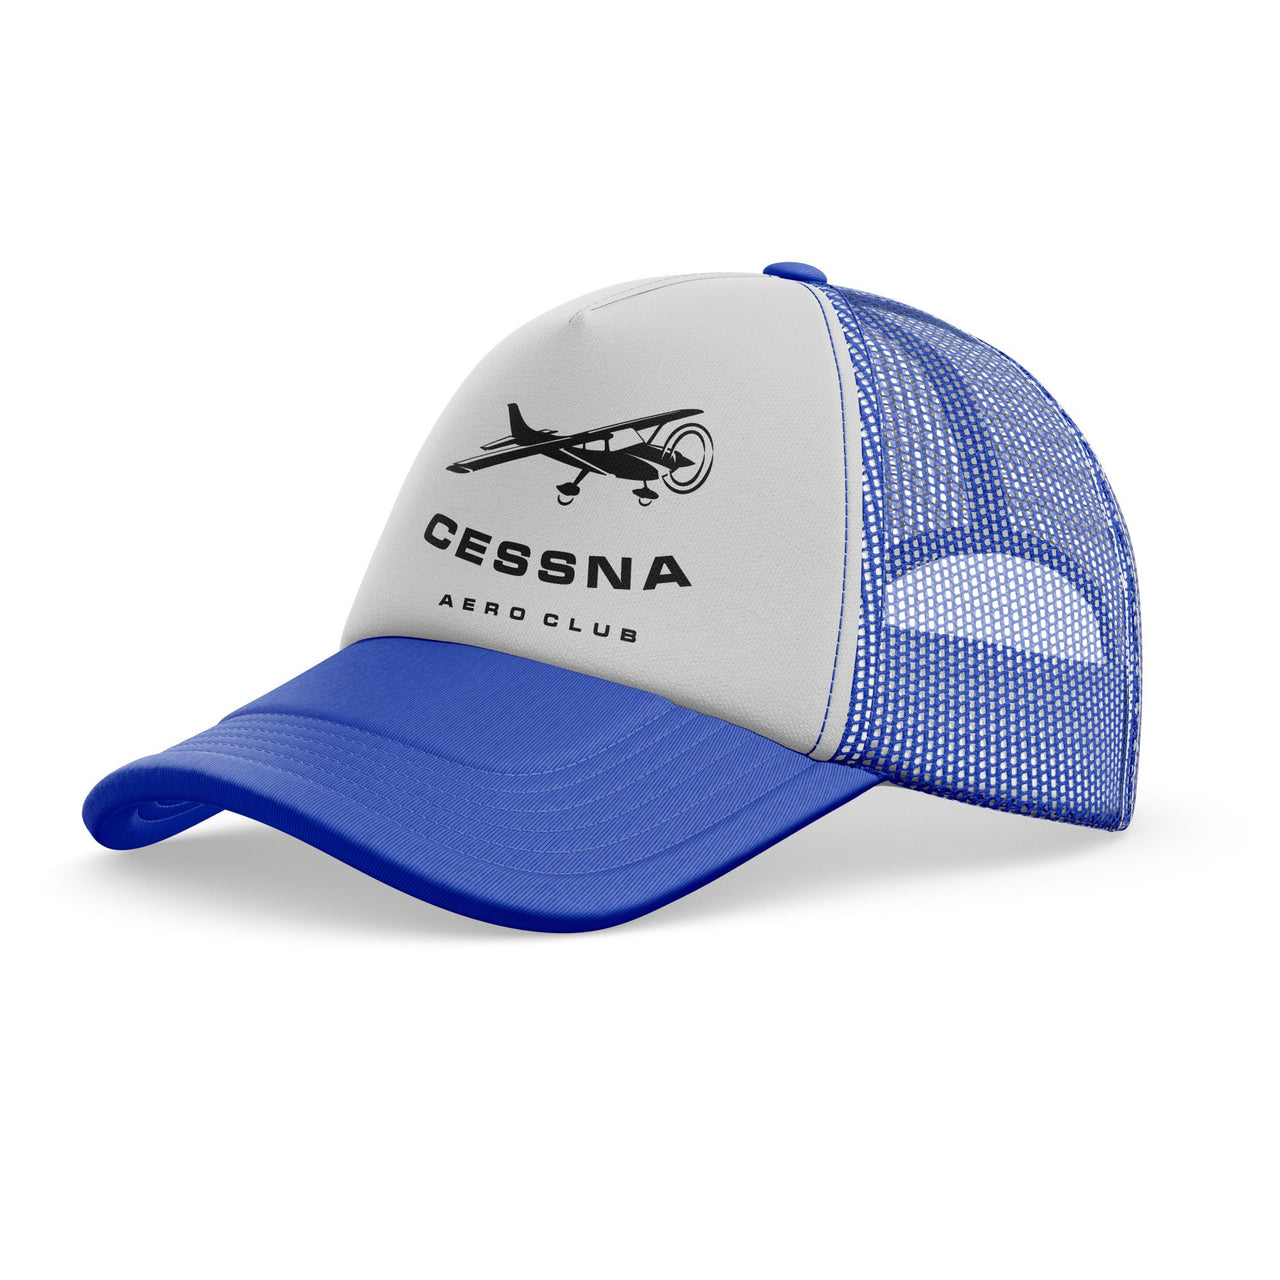 Cessna Aeroclub Designed Trucker Caps & Hats